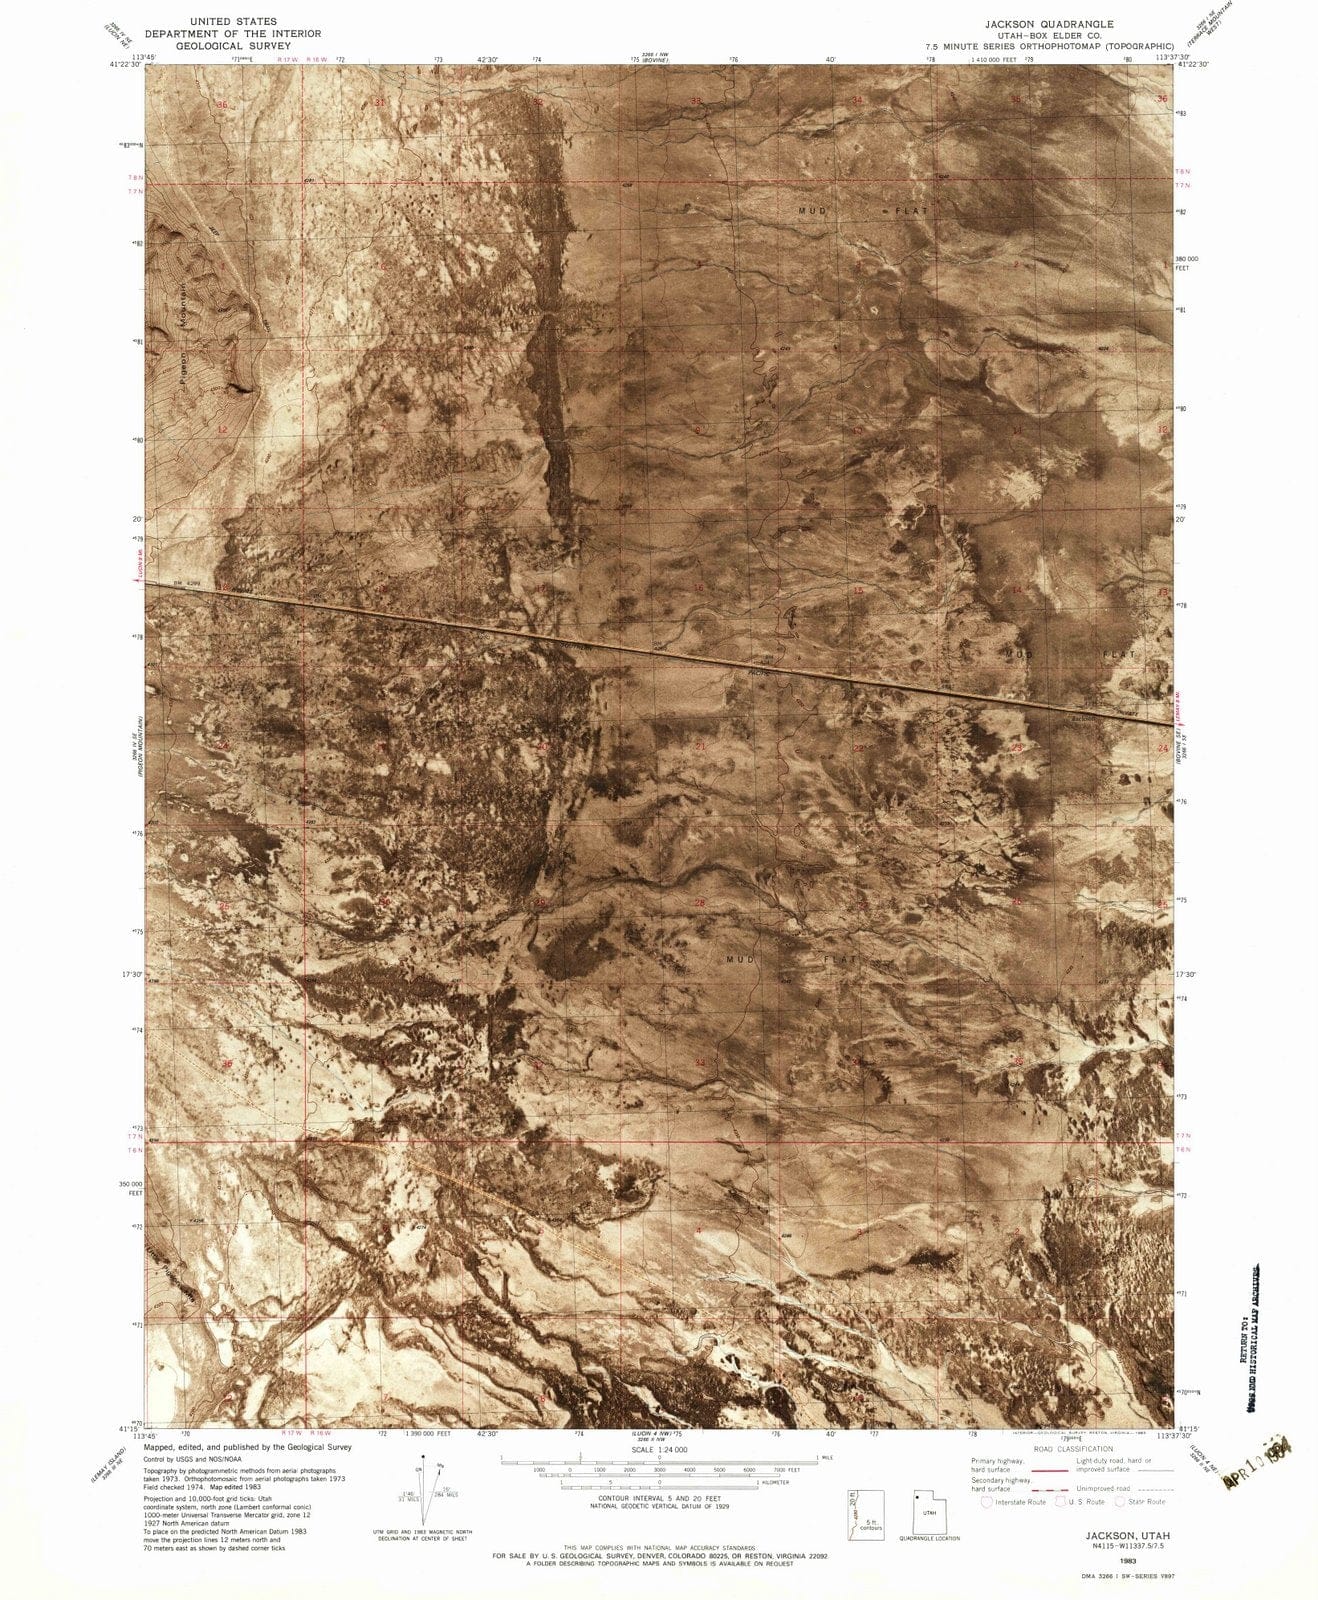 1983 Jackson, UT - Utah - USGS Topographic Map